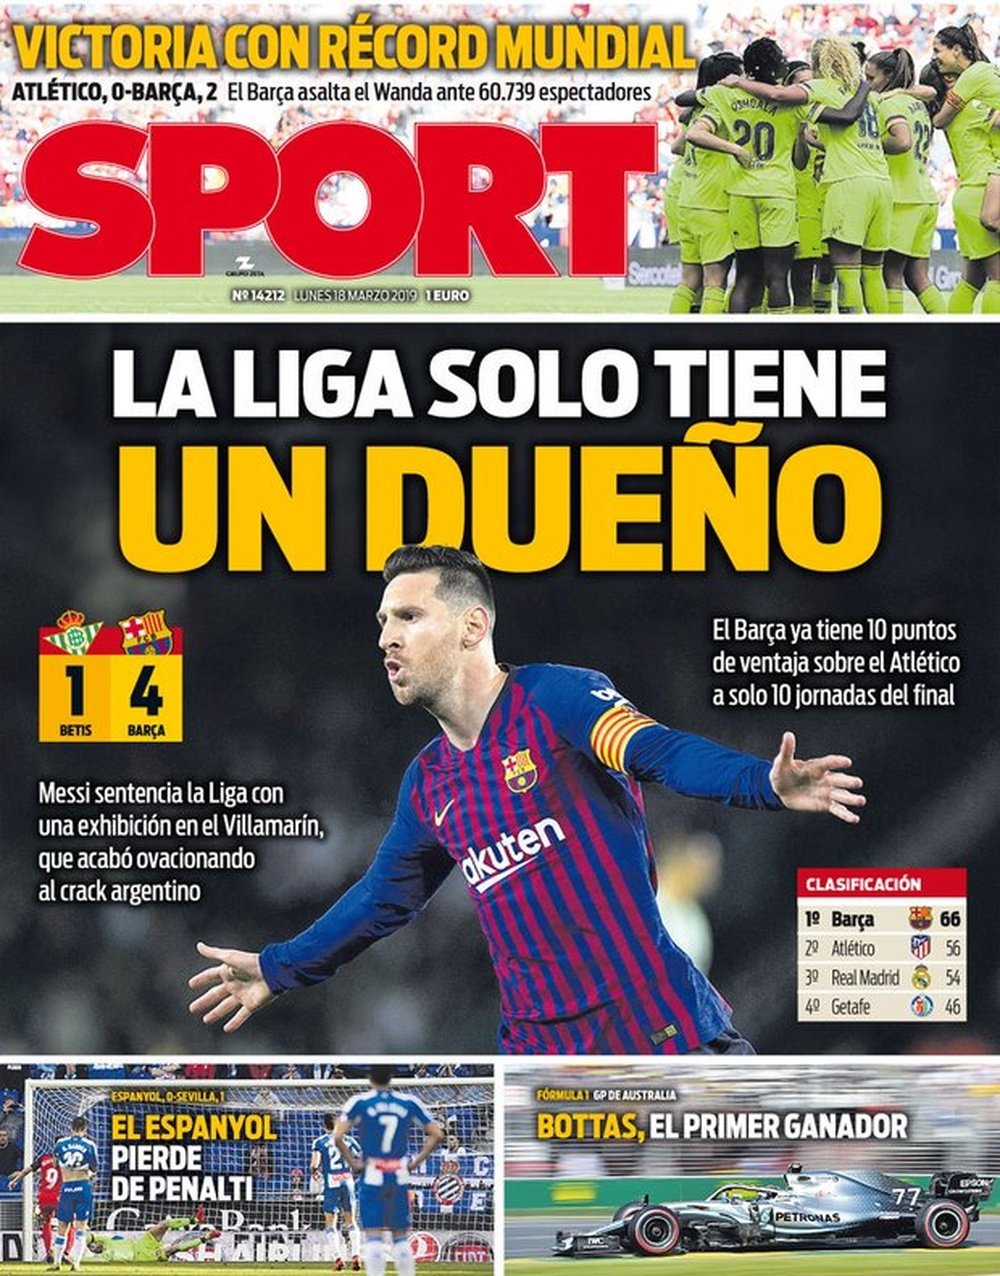 Capa do jornal 'Sport' de 18-03-19. Sport